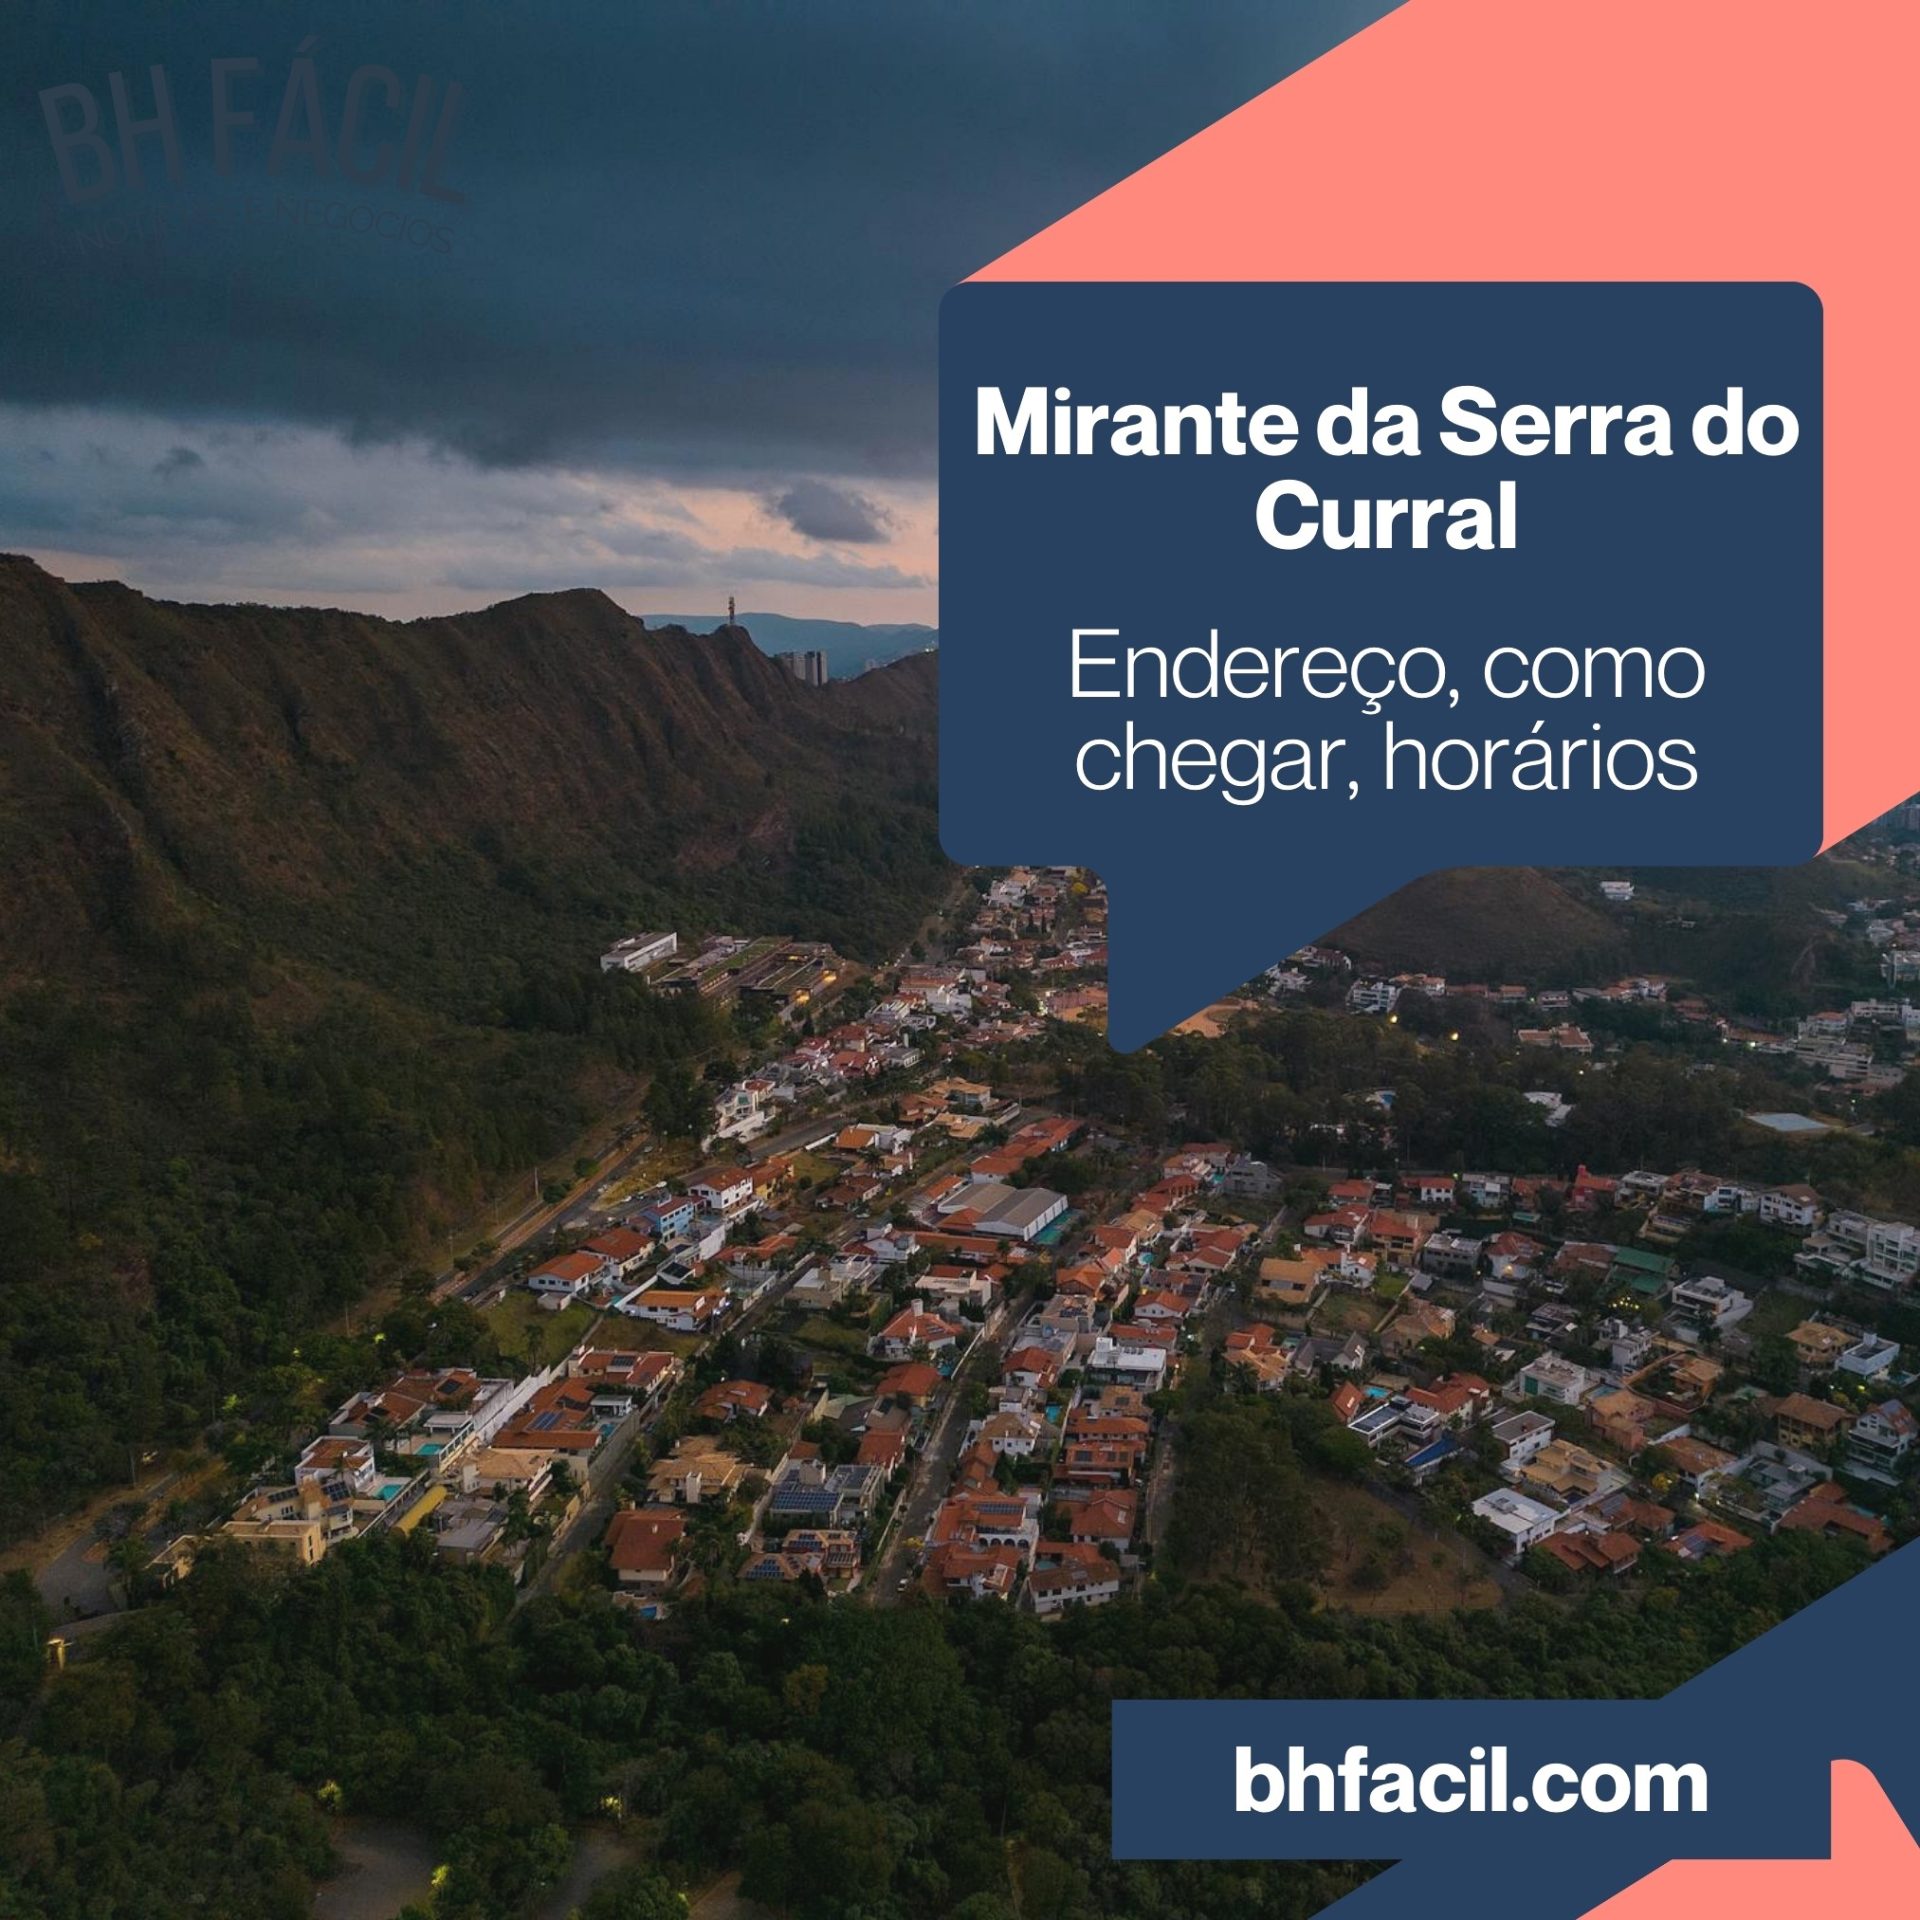 Mirante da Serra do Curral: endereço, telefone e tarifas